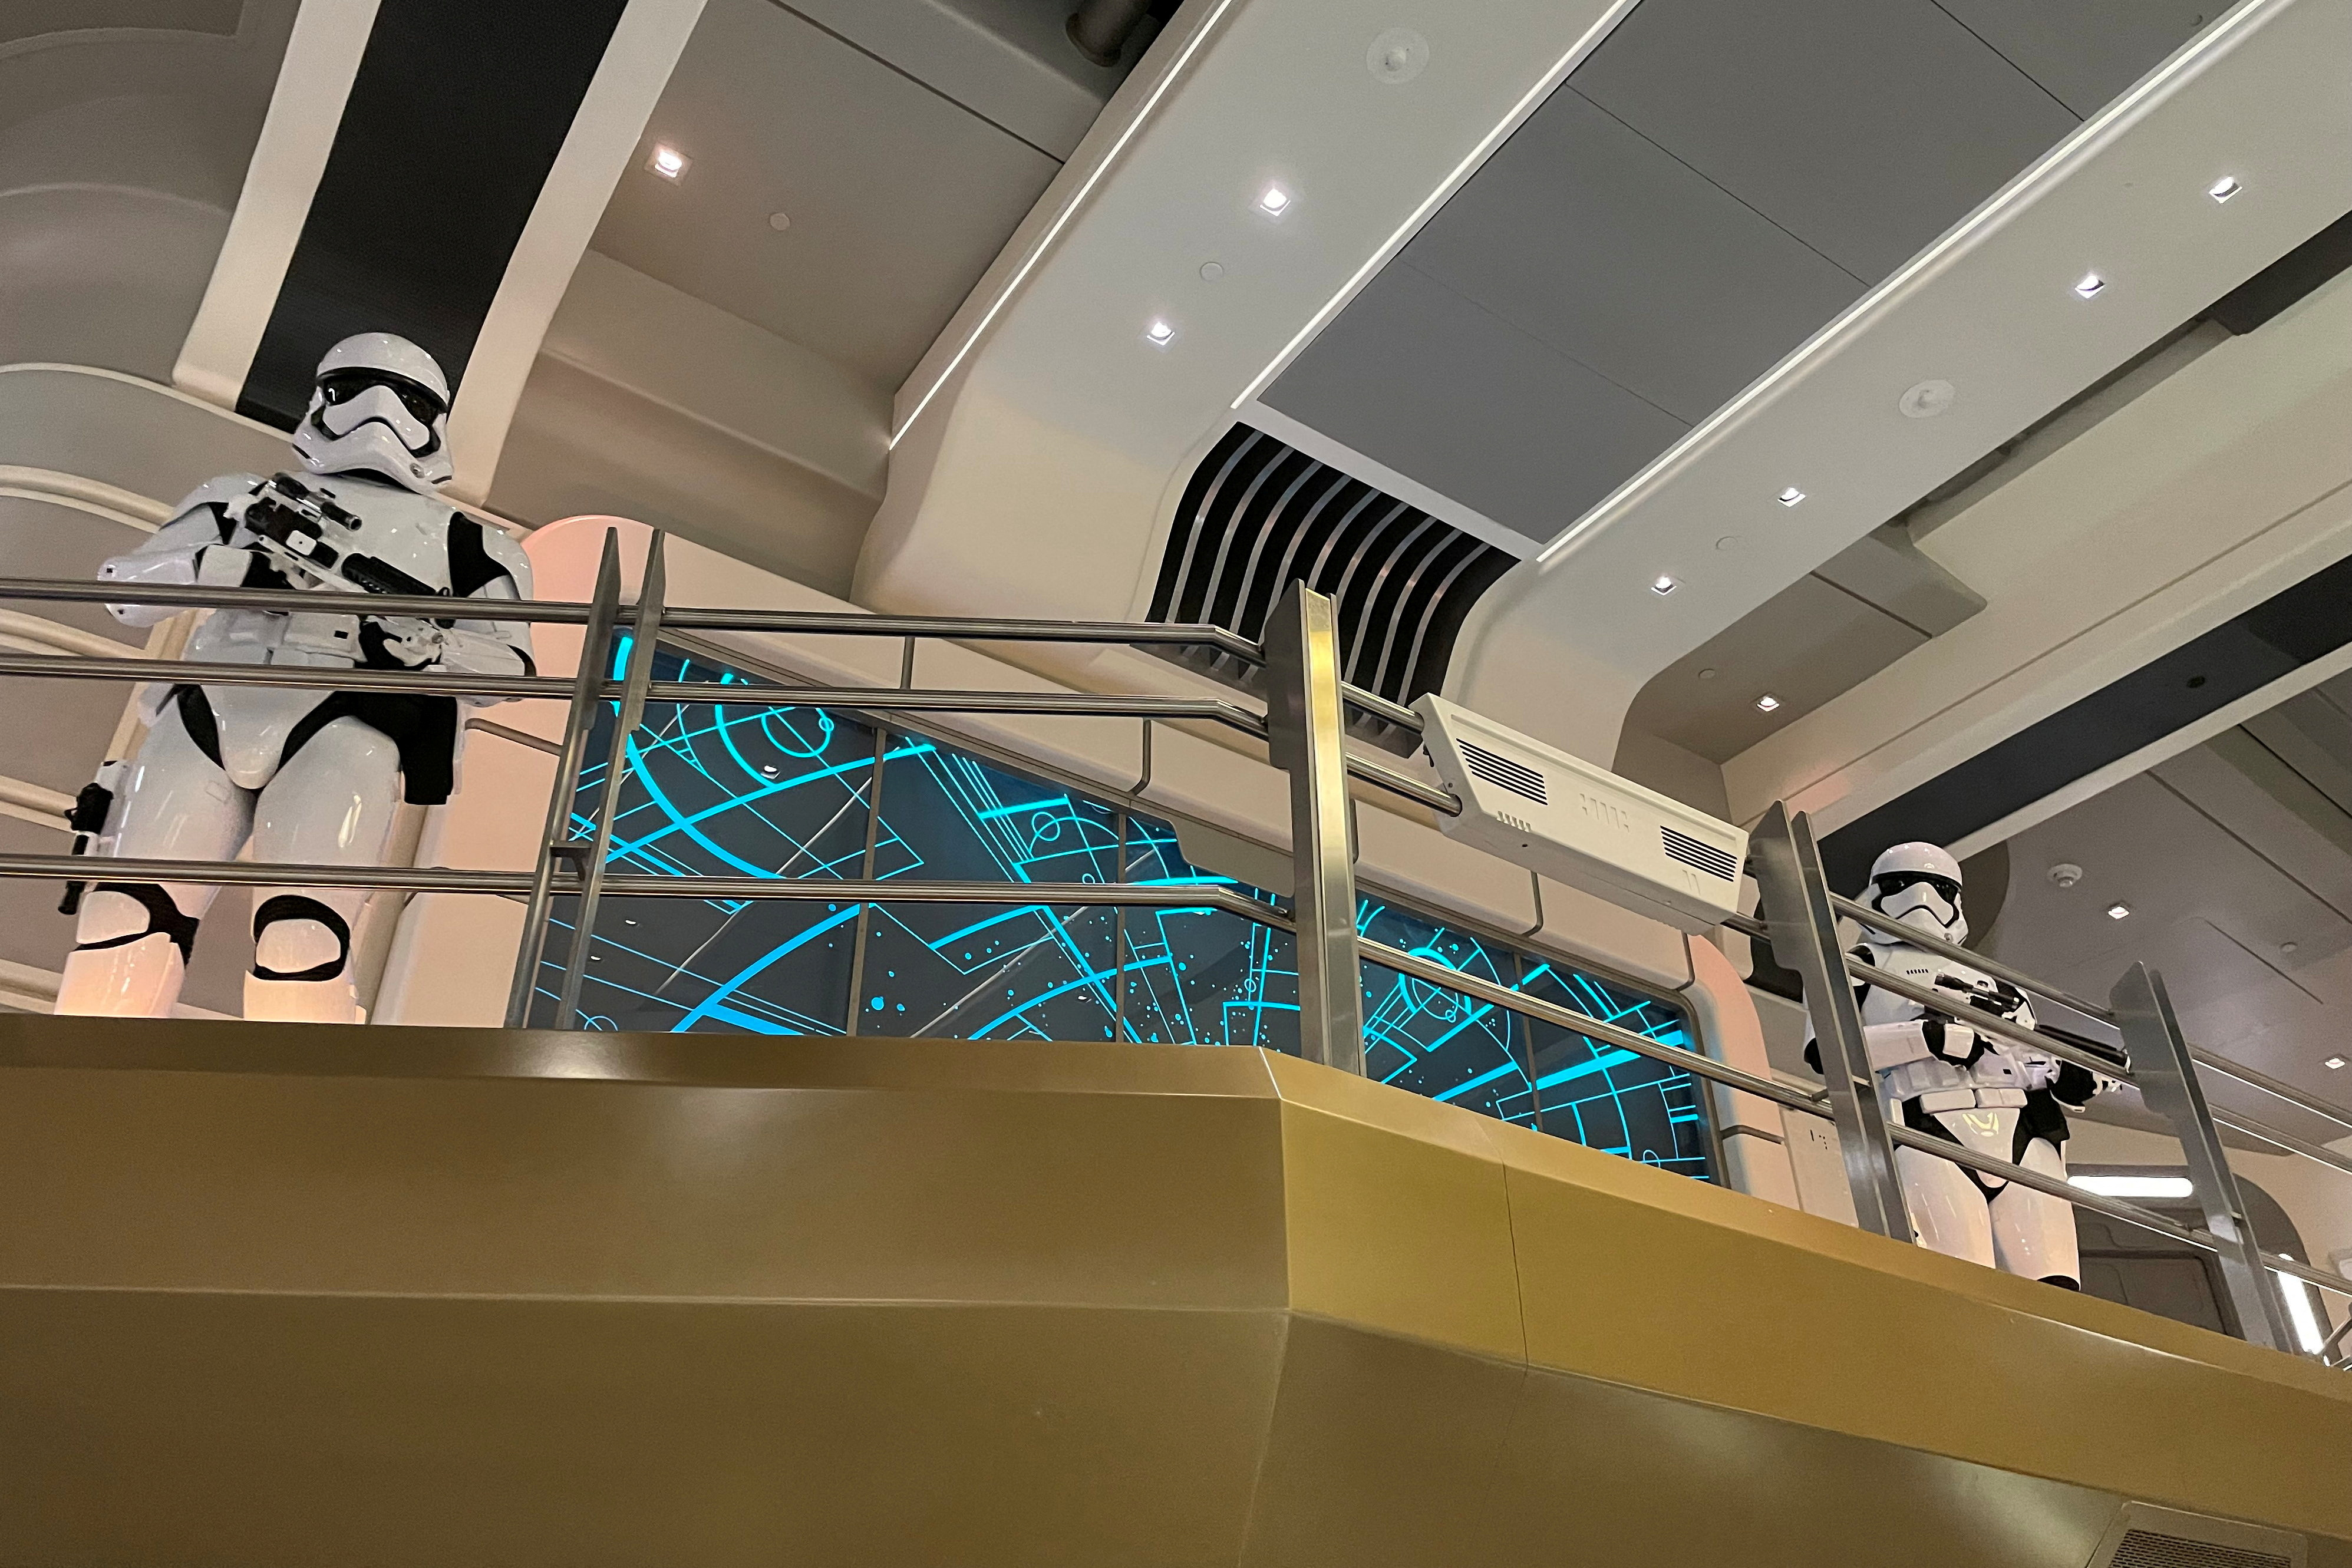 Star Wars Stormtroopers at Walt Disney World in Orlando, Florida